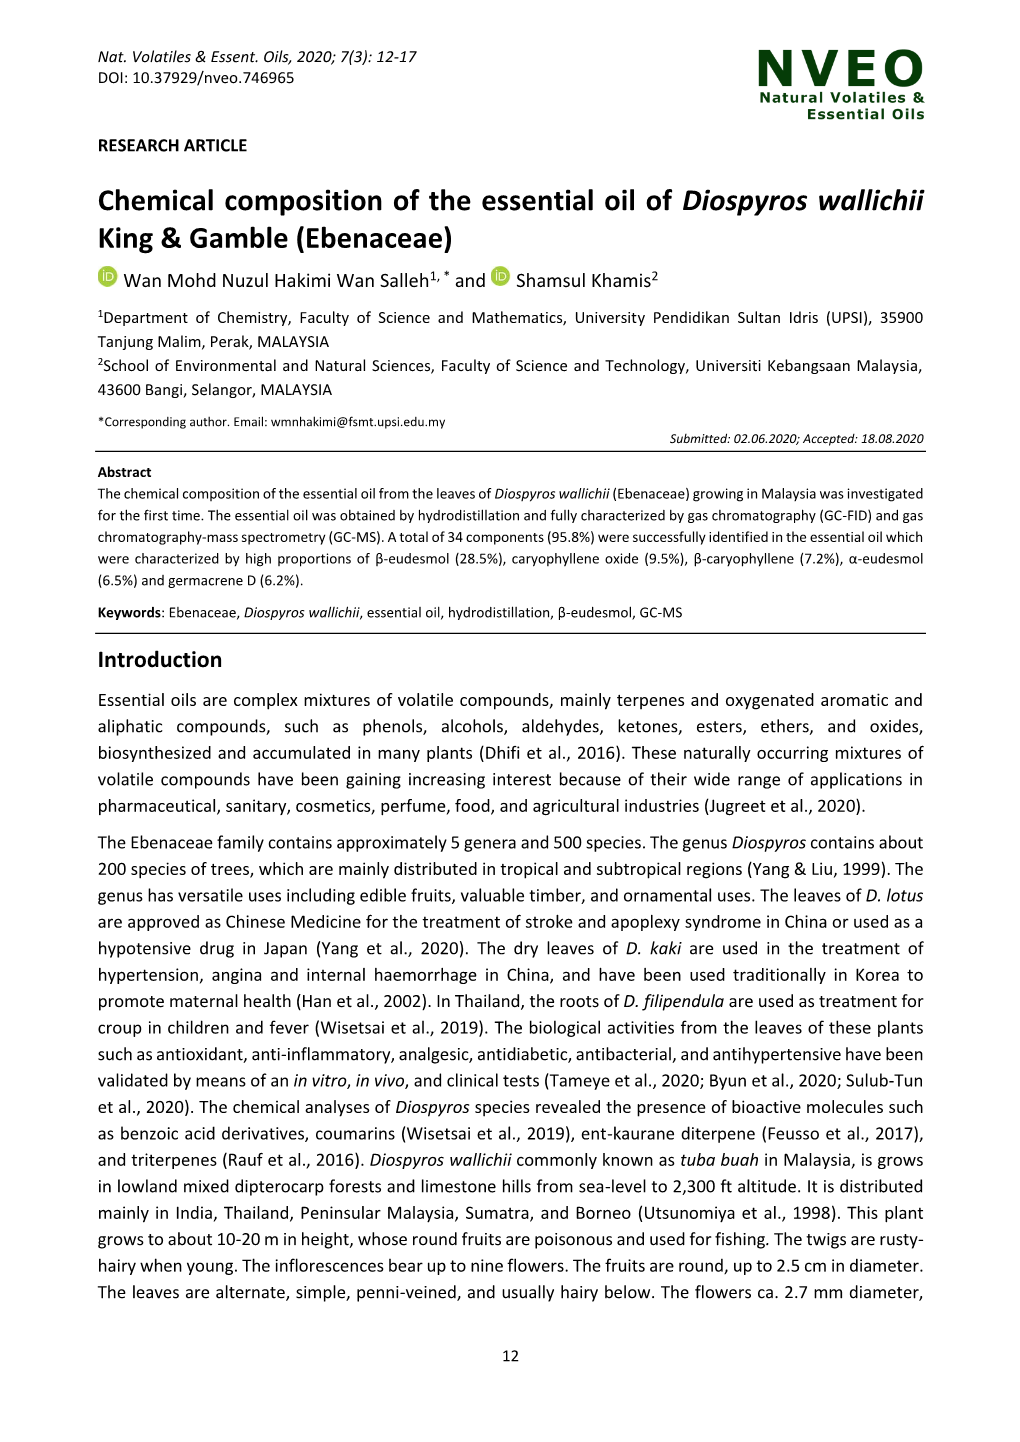 Chemical Composition of the Essential Oil of Diospyros Wallichii King & Gamble (Ebenaceae) Wan Mohd Nuzul Hakimi Wan Salleh1, * and Shamsul Khamis2